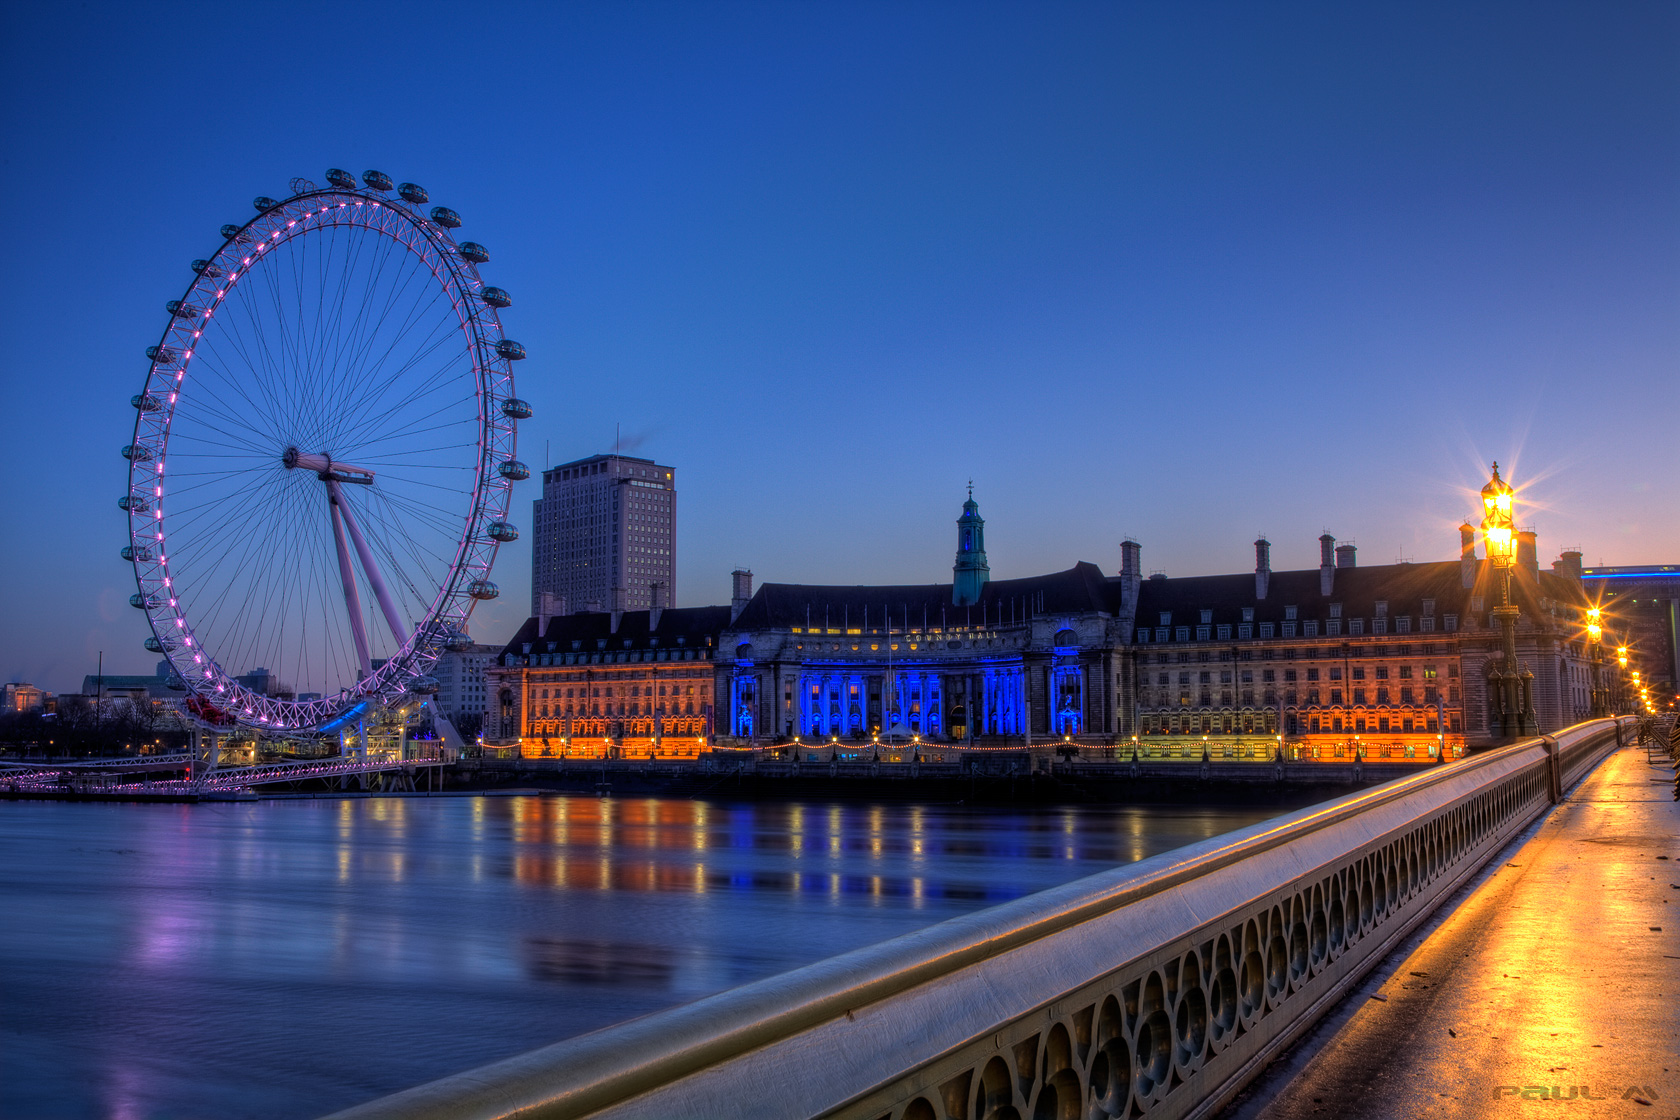 London Eye - London Photo (25177008) - Fanpop